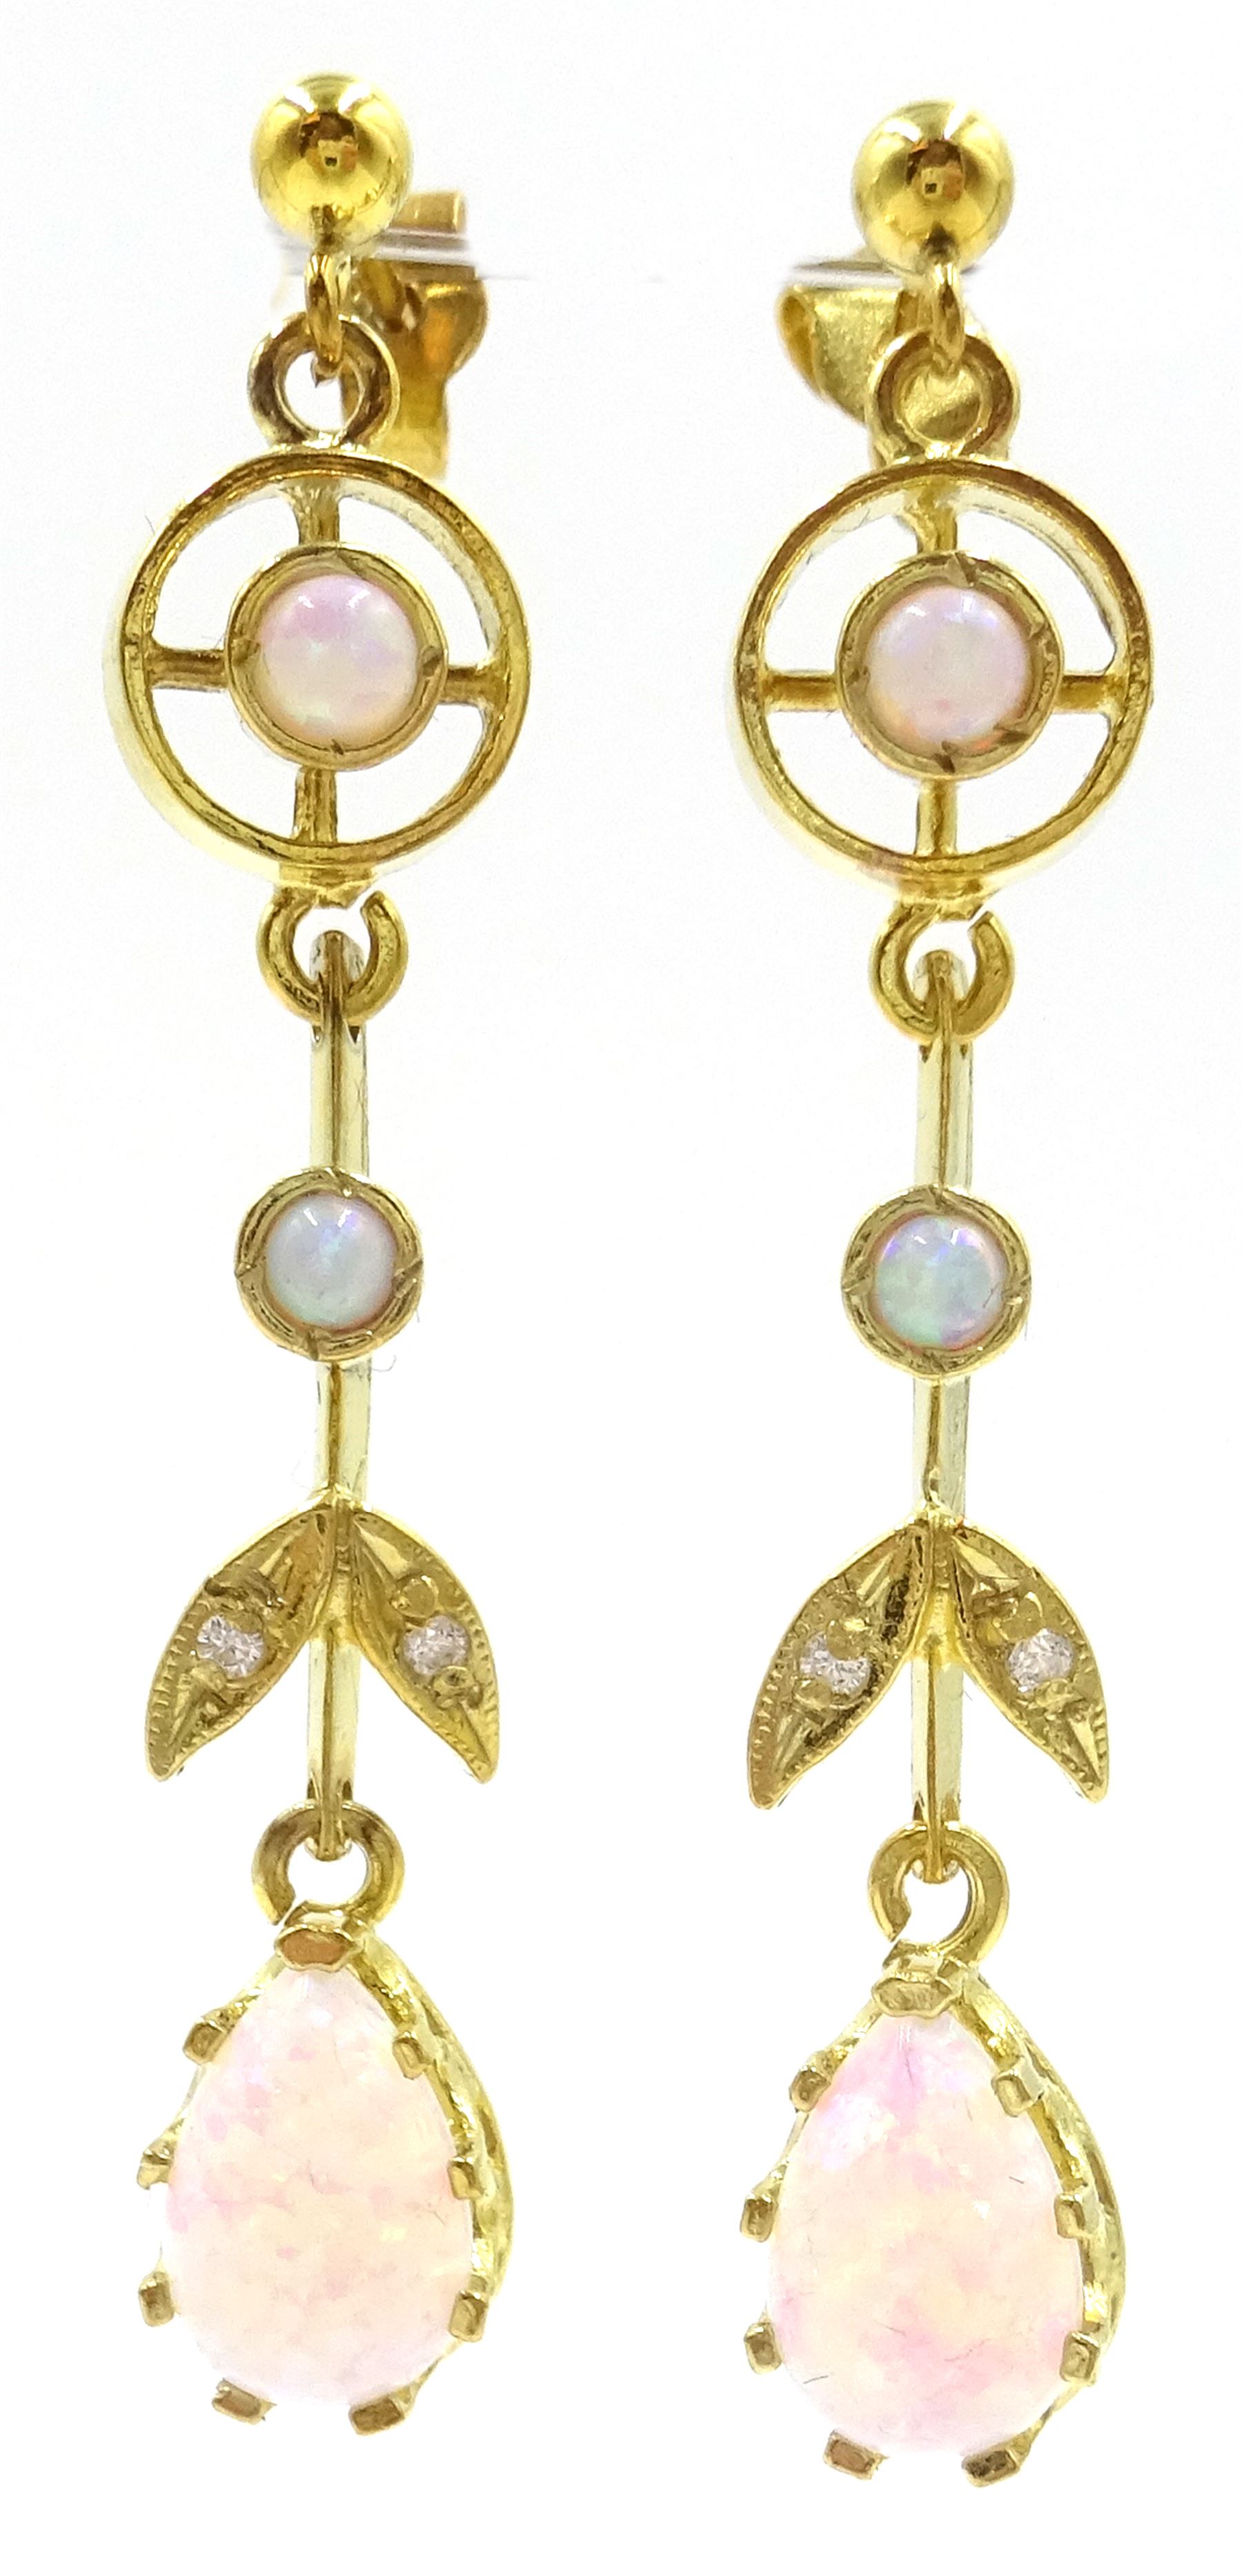 Pair of silver-gilt opal pendant earrings